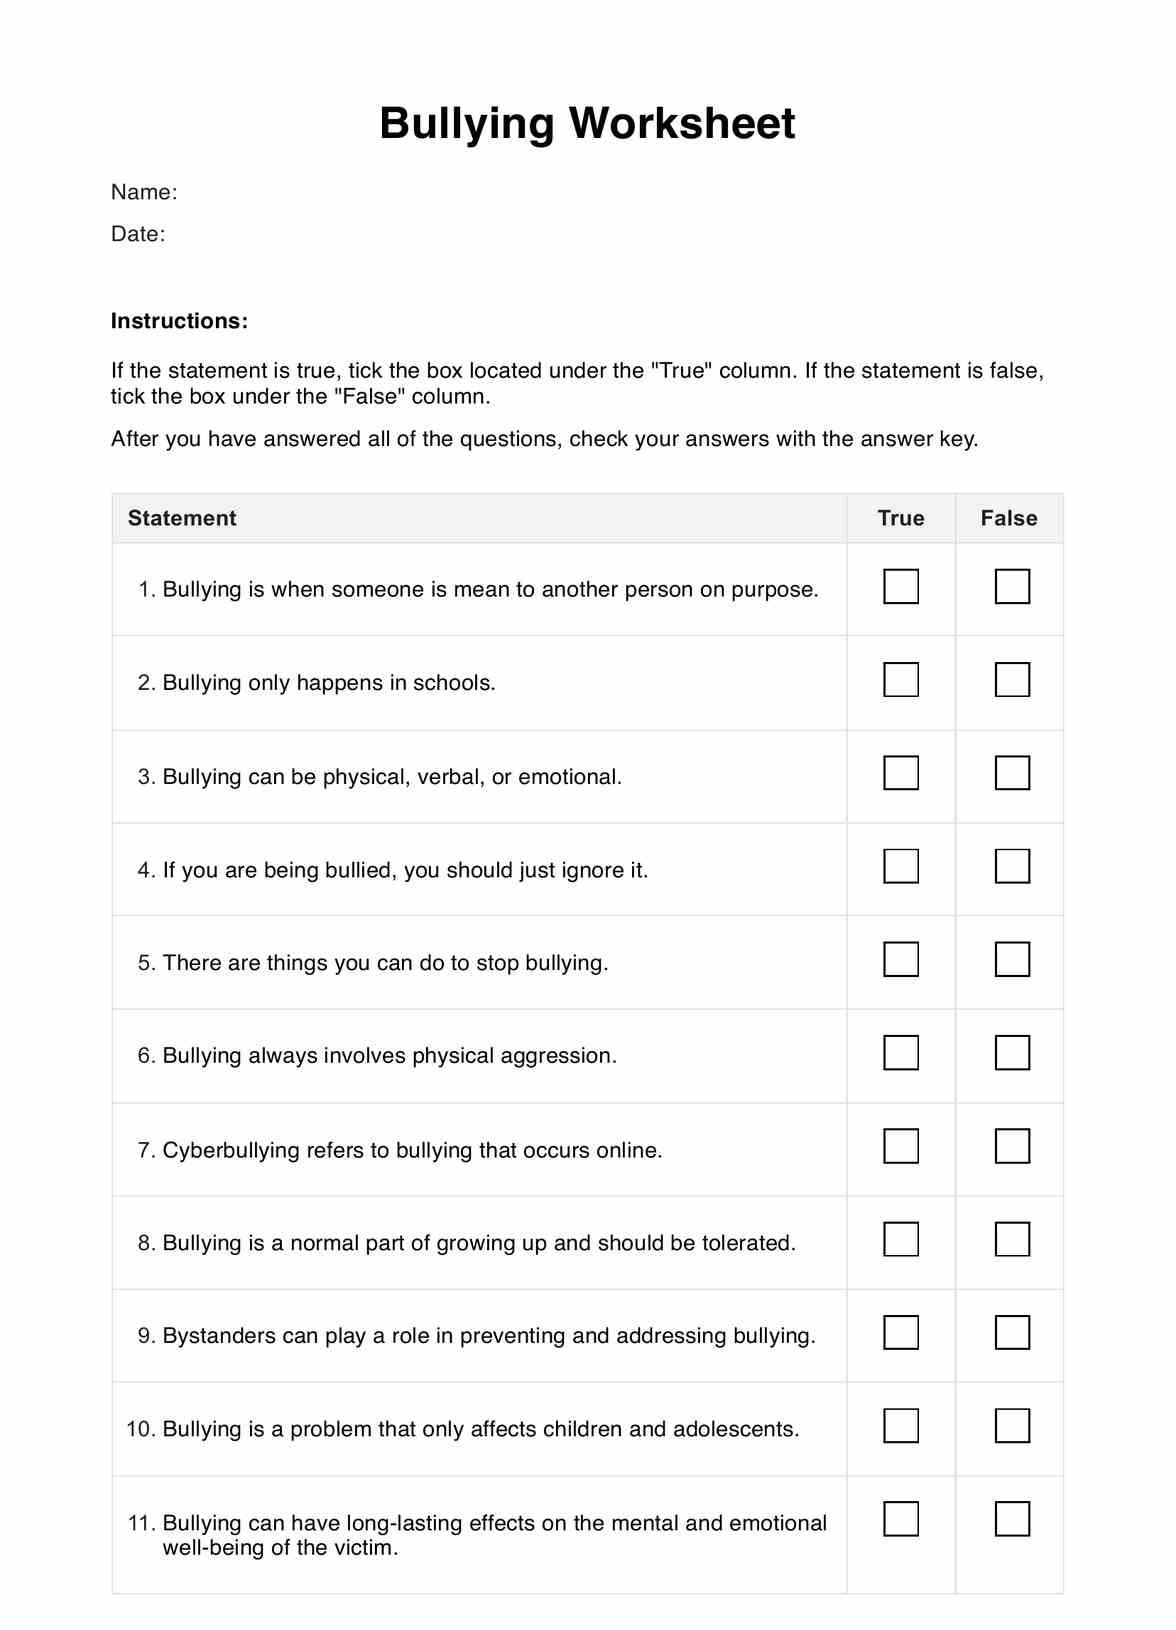 Bullying Worksheet PDF Example